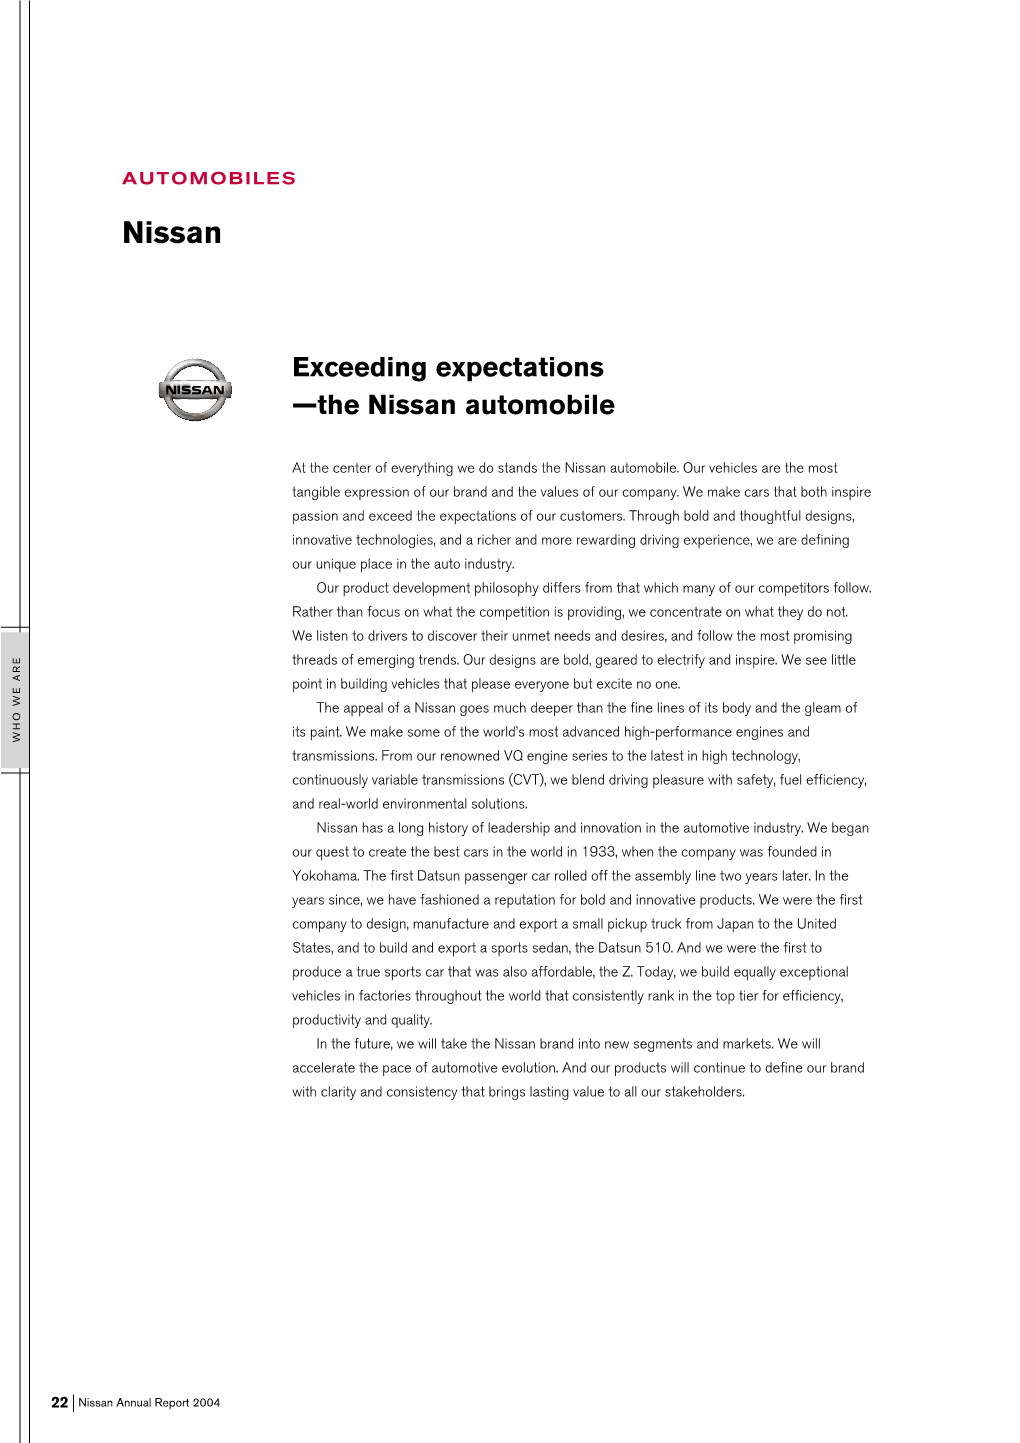 Nissan [P22-23]